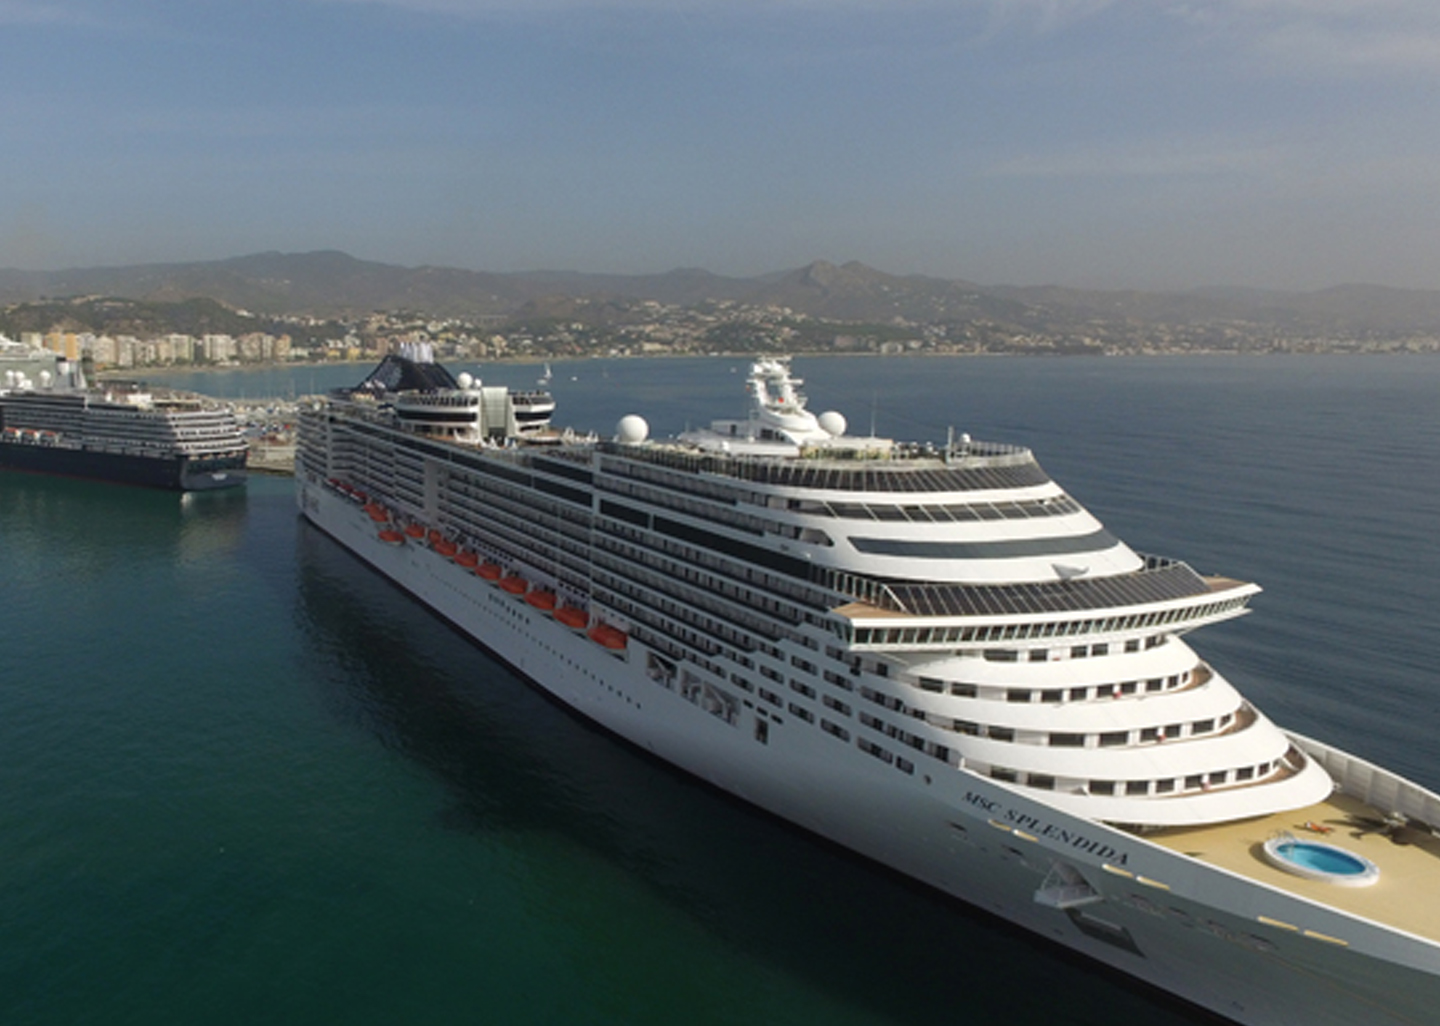 Malaga capital will be homeporting MSC Cruises in 2020